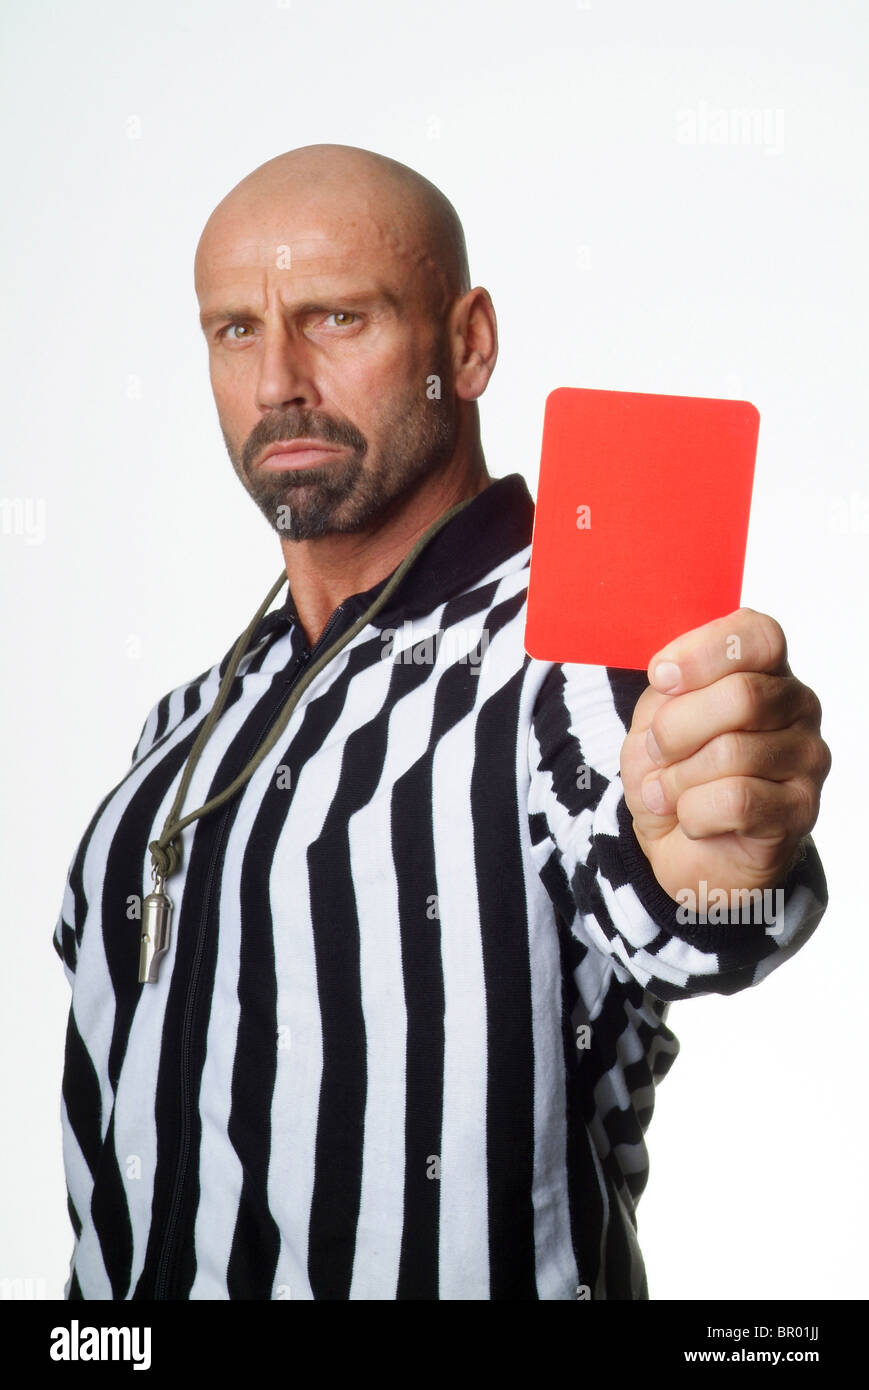 Árbitro dando una tarjeta roja Fotografía de stock - Alamy